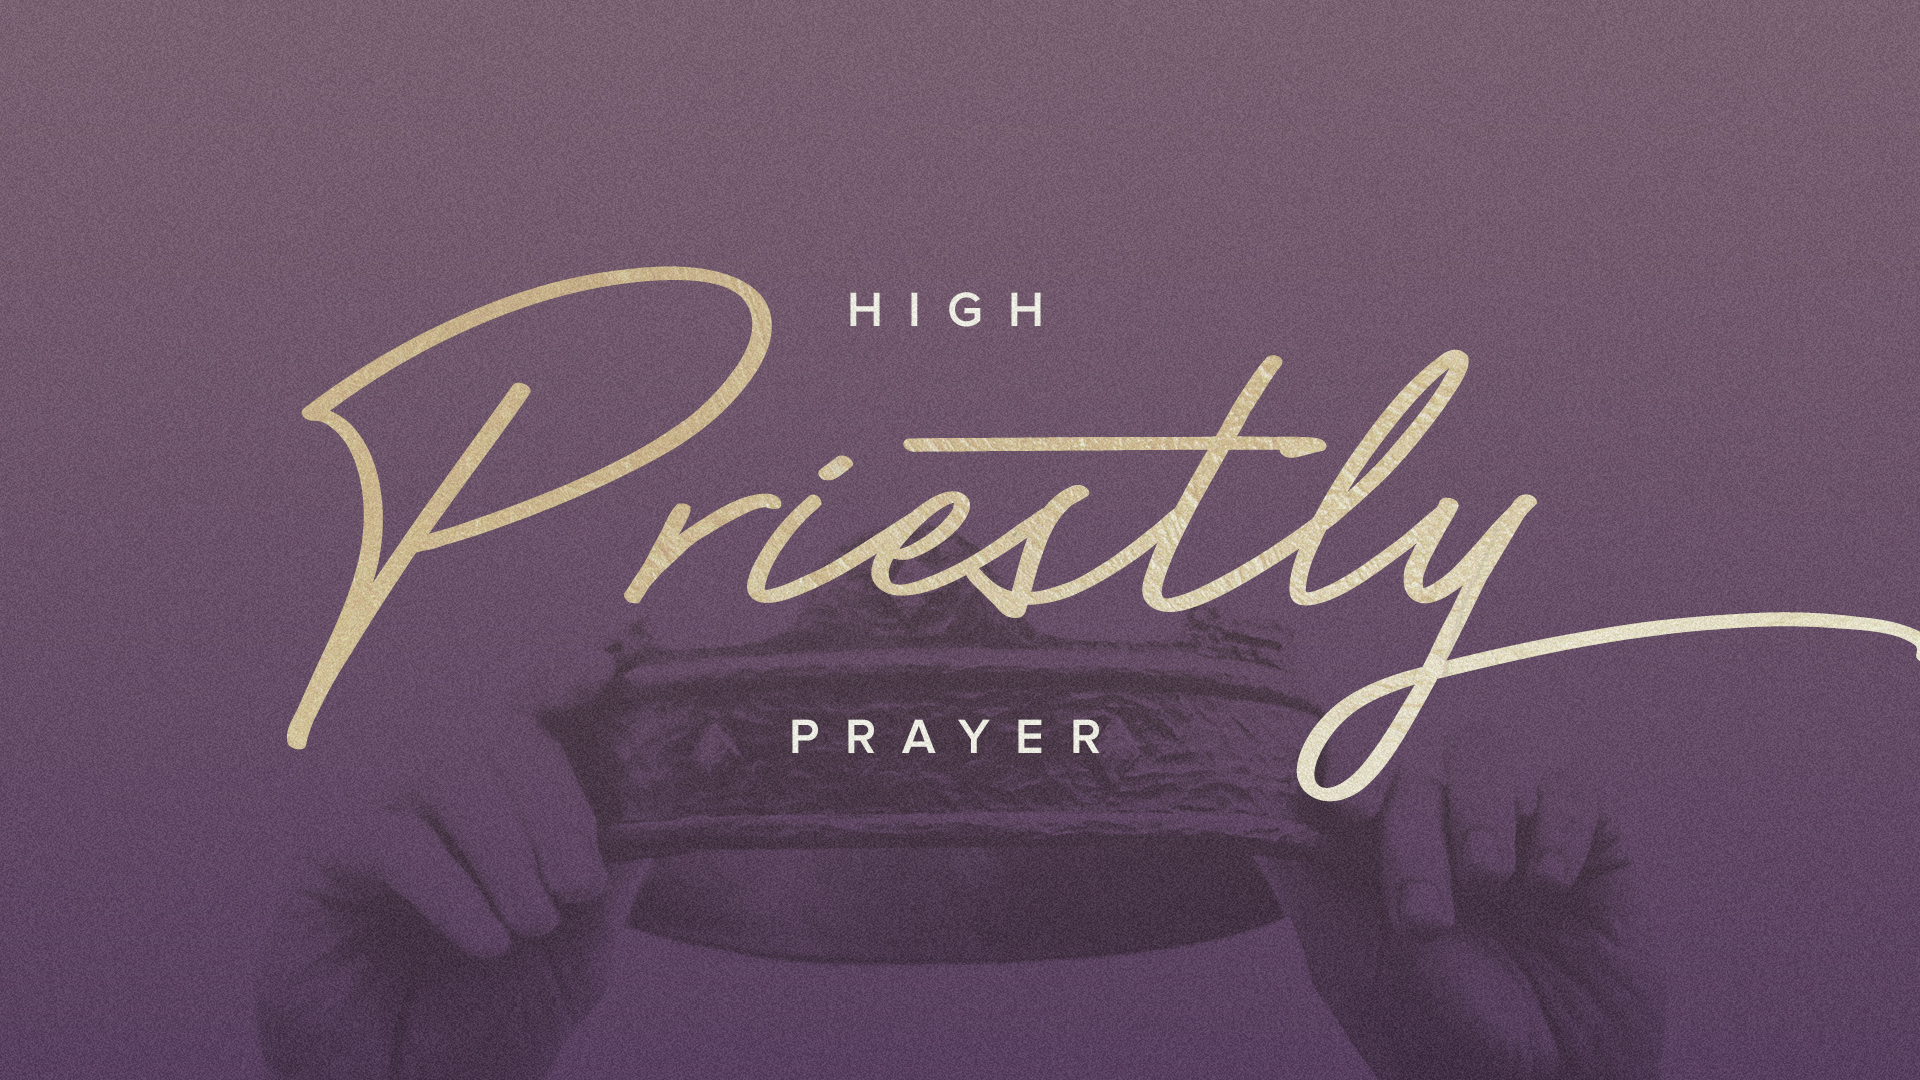 High Priestly Prayer Week 2